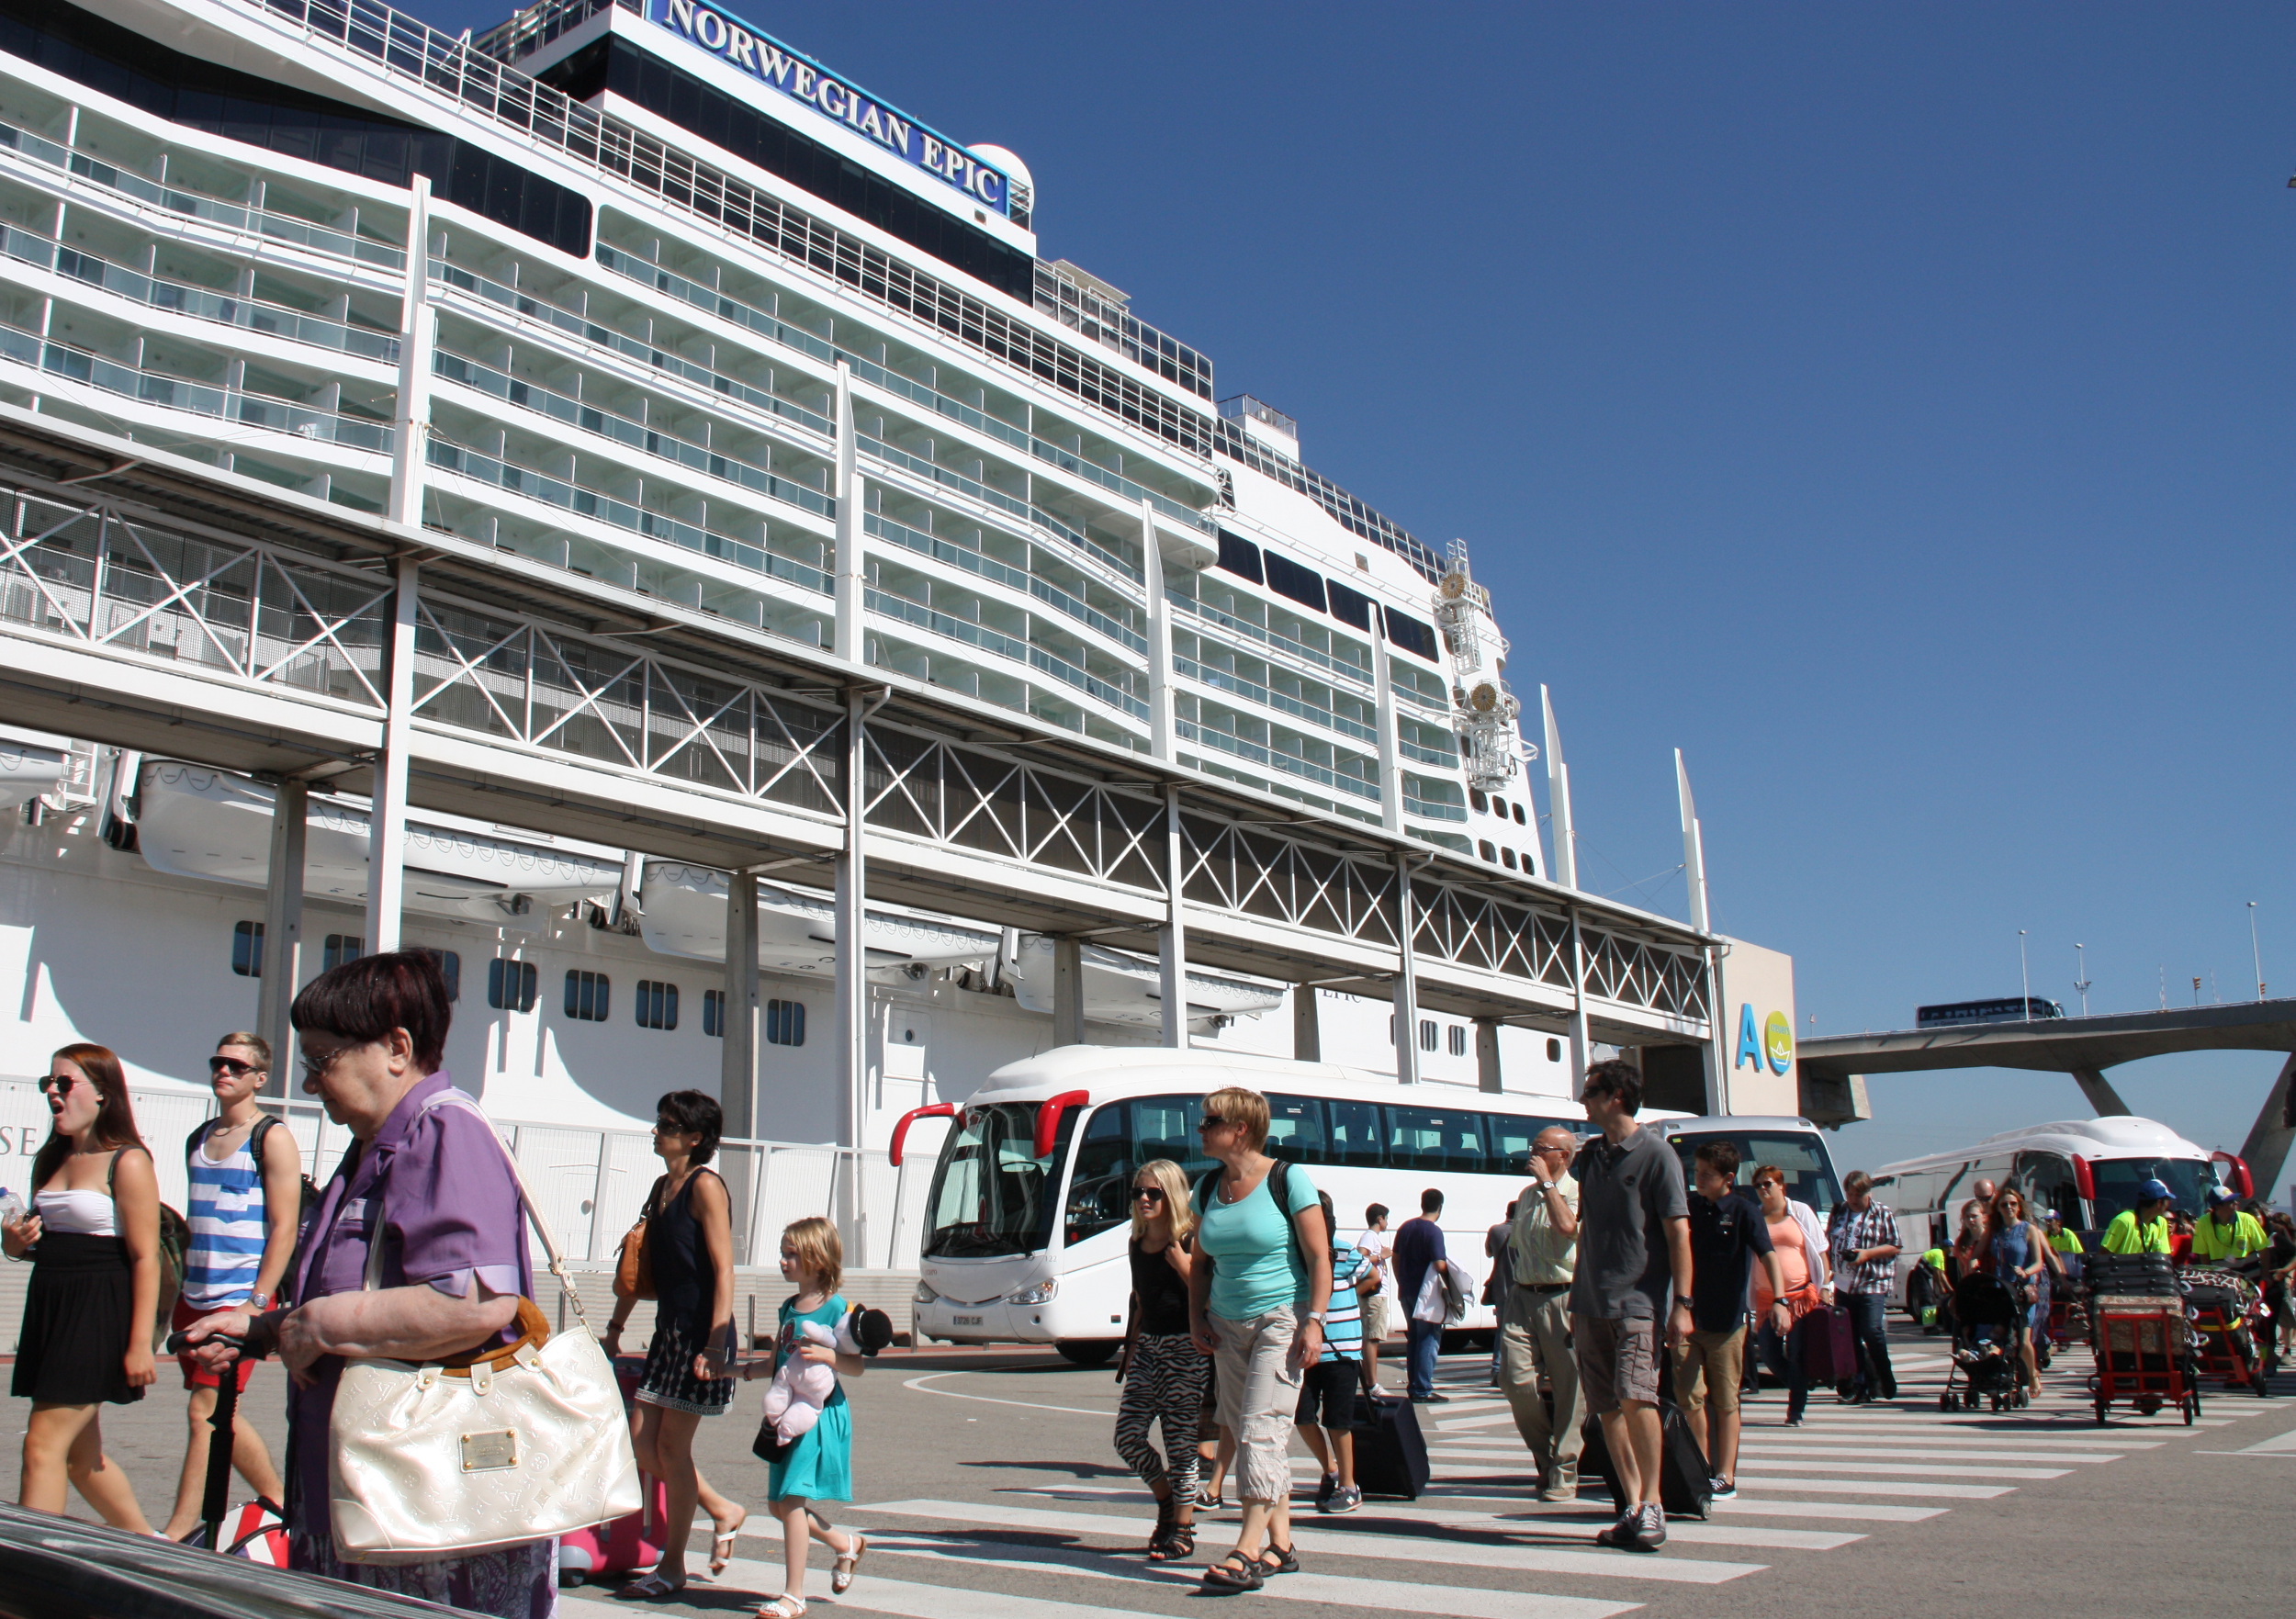 Crusieship passengers disembarking at Barcelona port (by ACN)